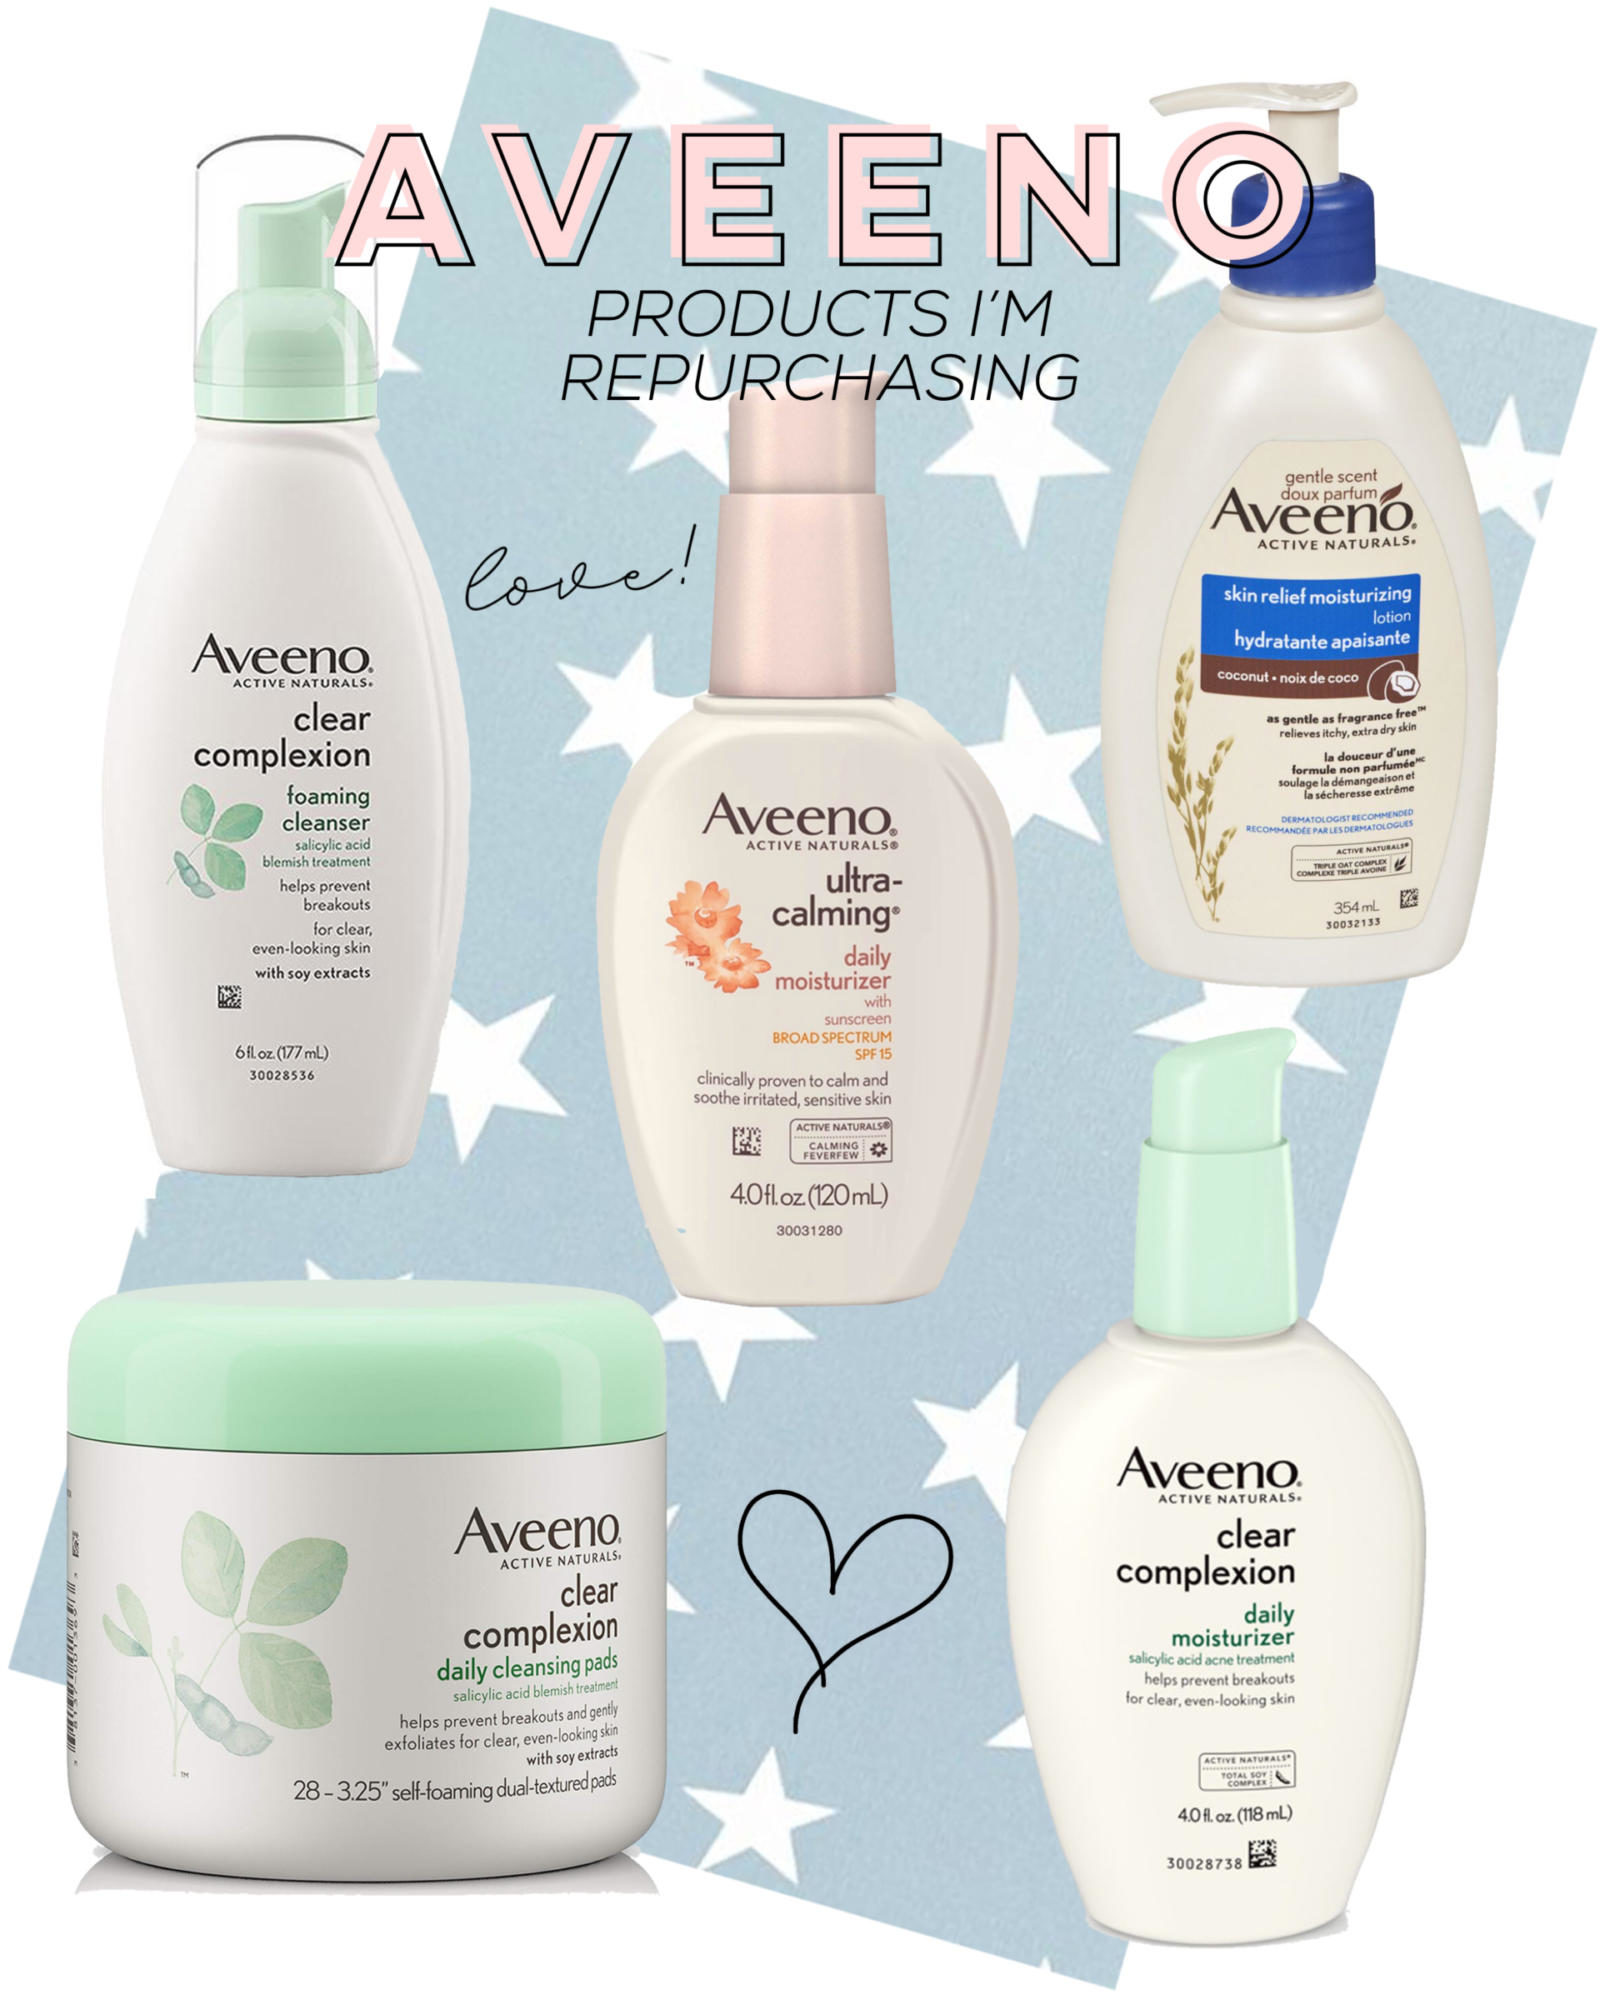 Aveeno Products I'm Repurchasing